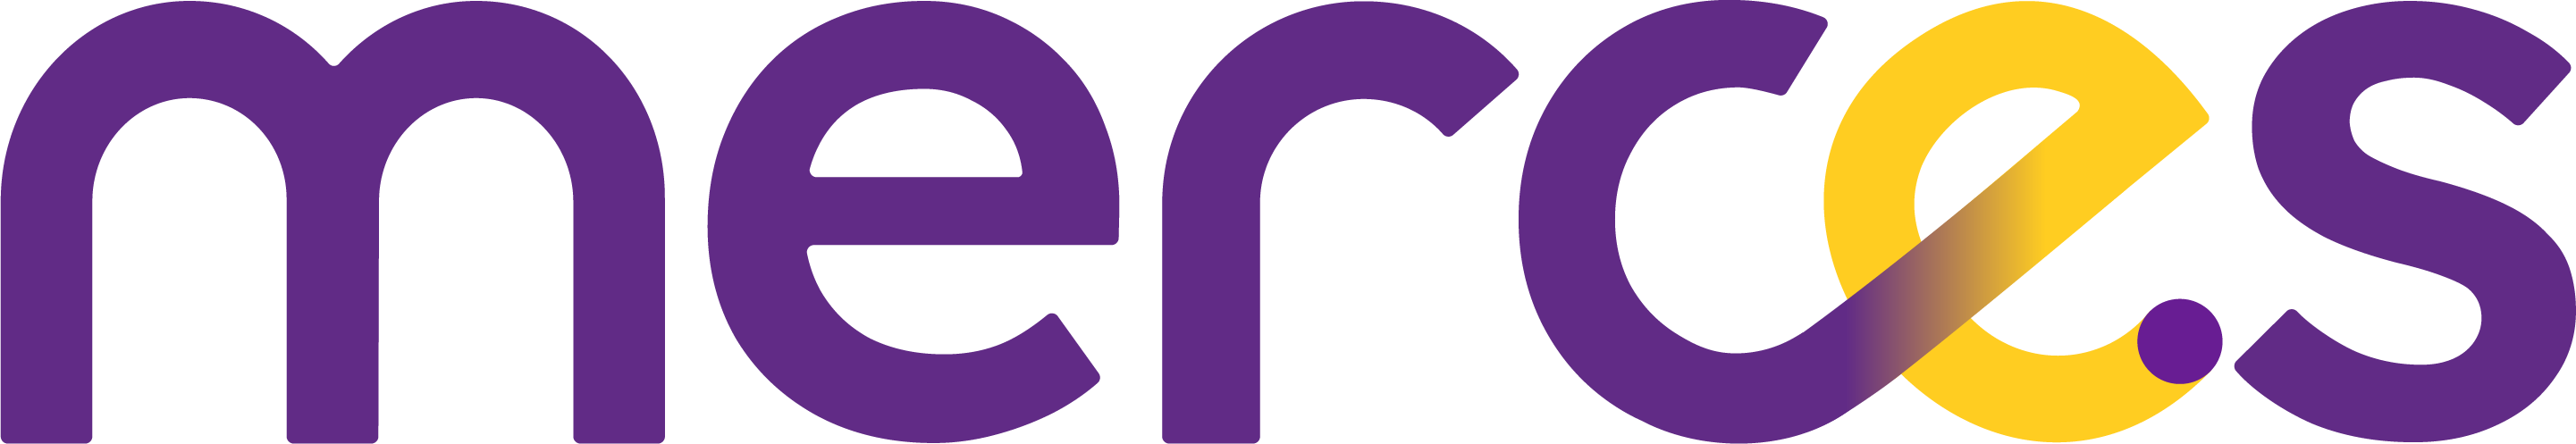 Merces_Logo - Origineel.png